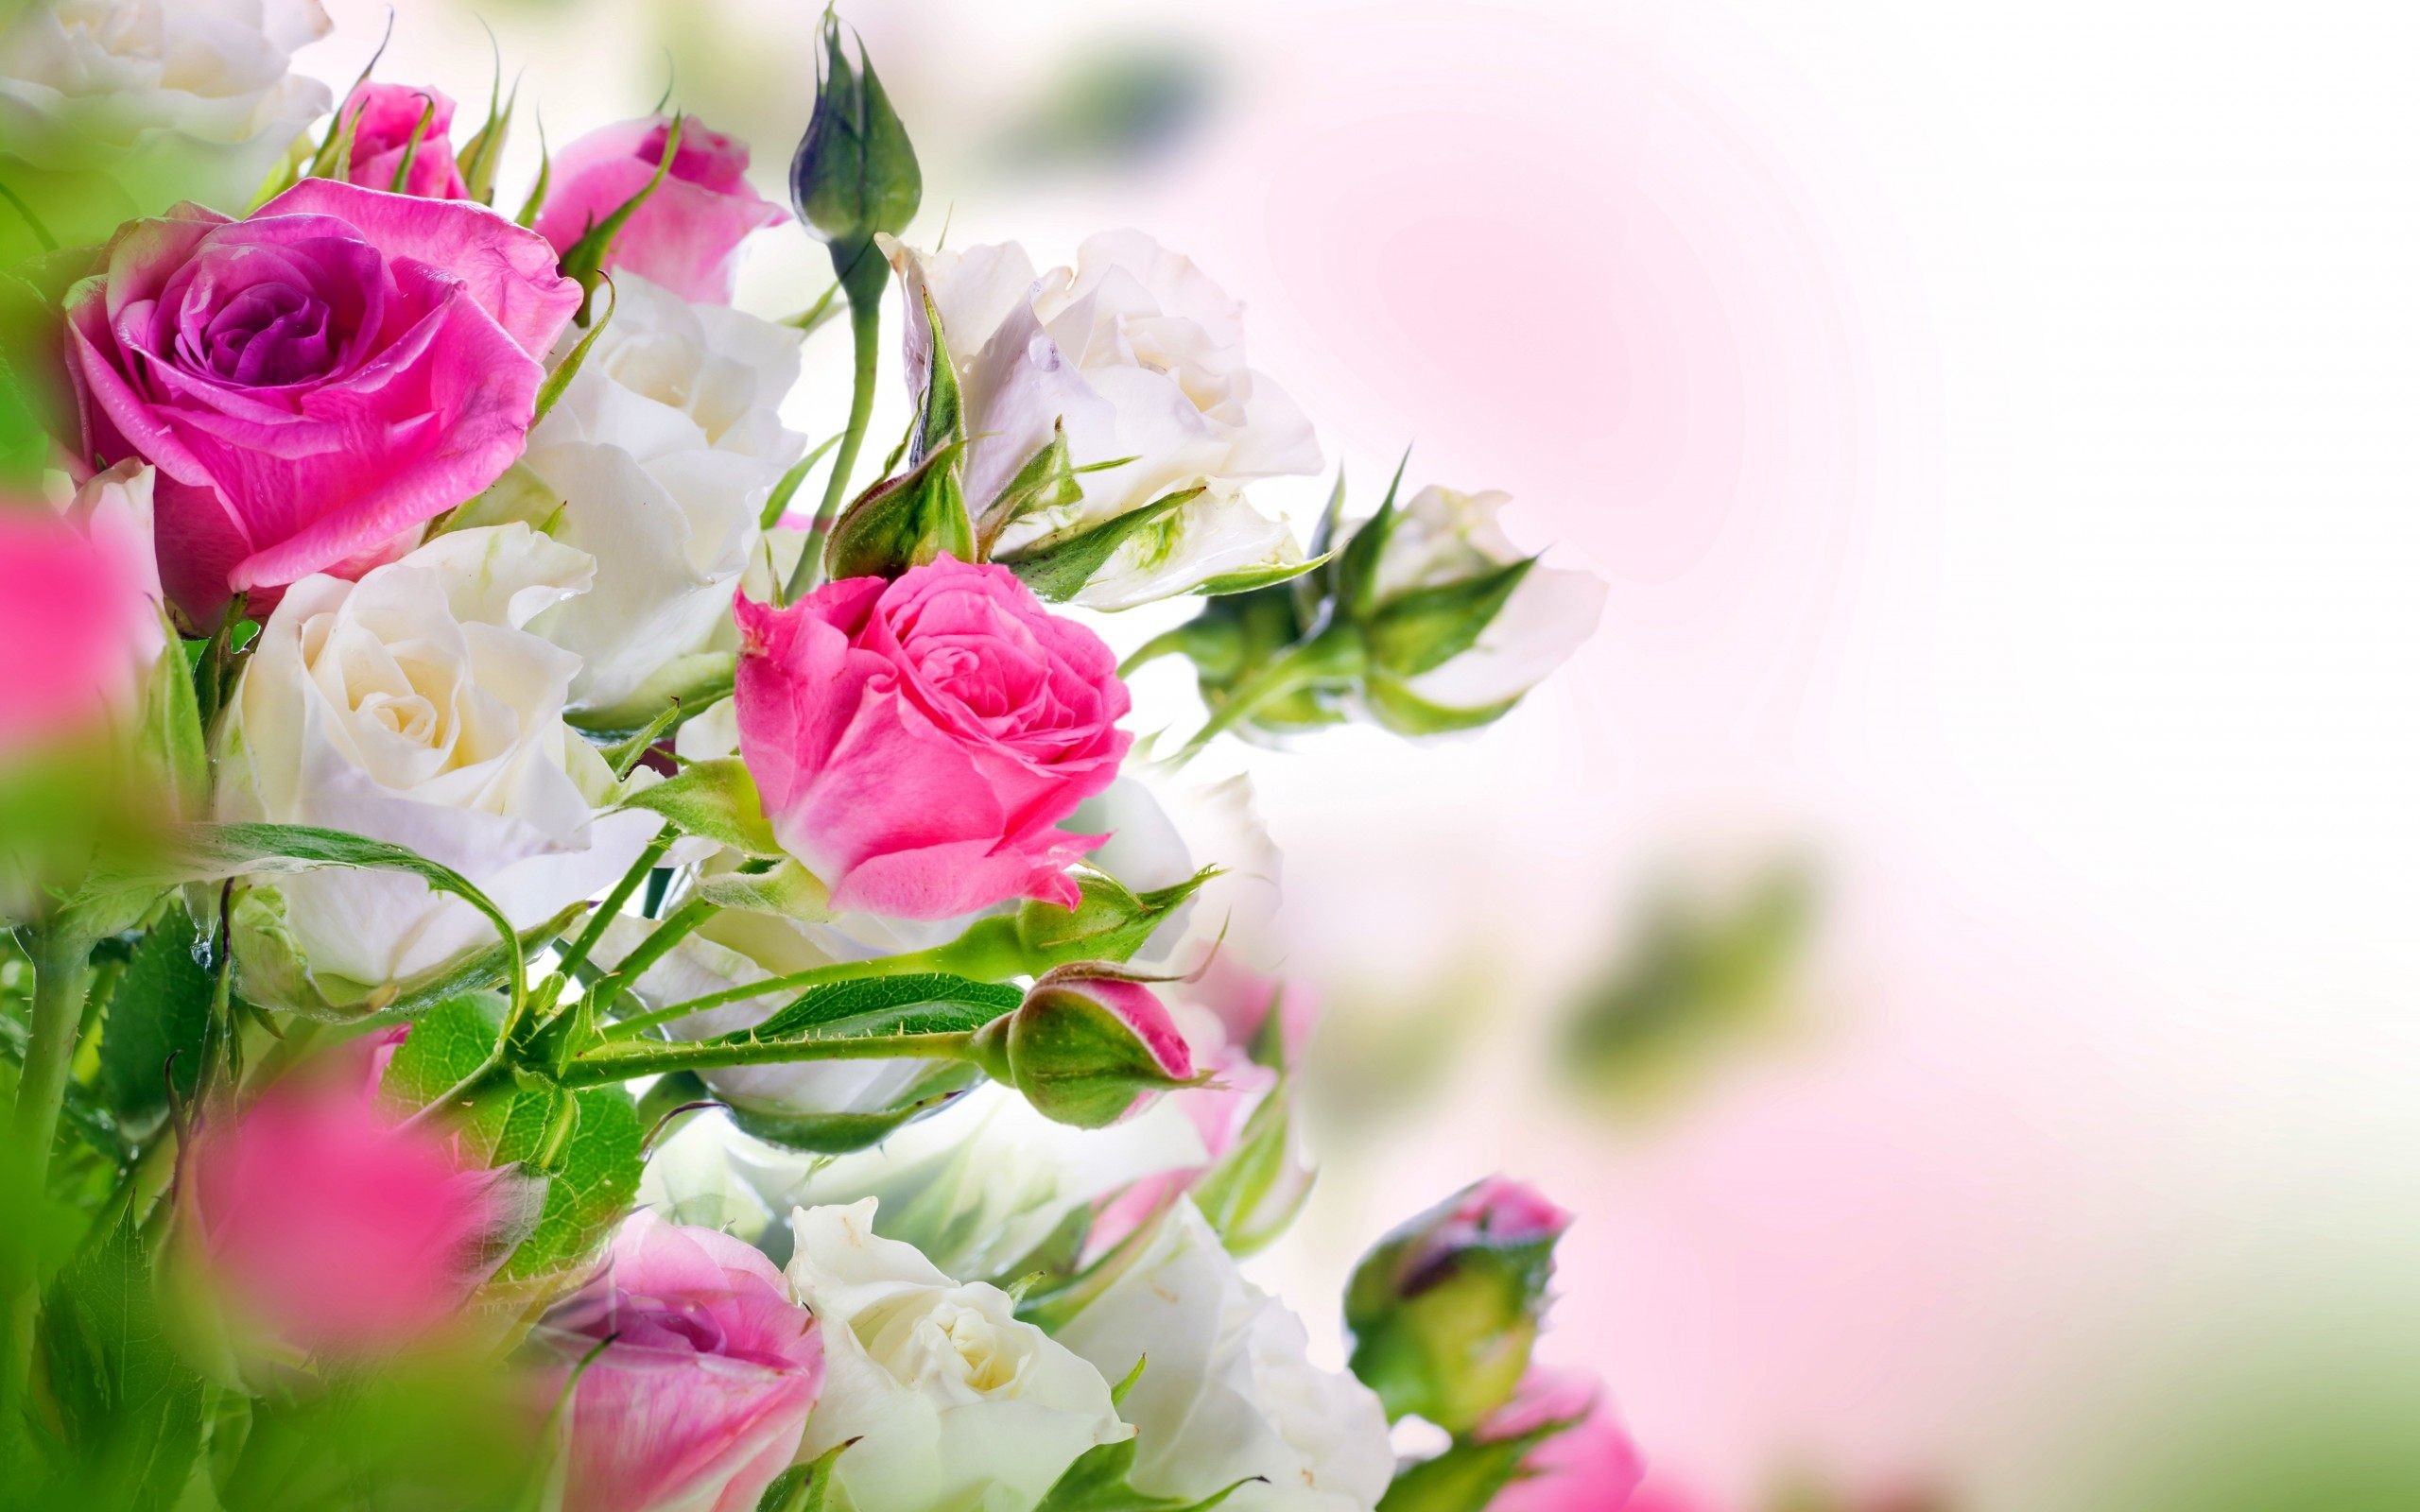 rose flower wallpaper hd descarga gratuita,flor,rosado,ramo de flores,rosas de jardín,pétalo